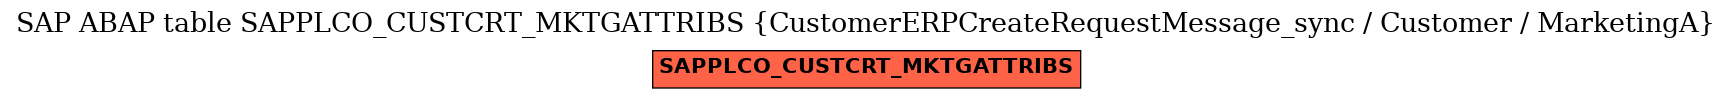 E-R Diagram for table SAPPLCO_CUSTCRT_MKTGATTRIBS (CustomerERPCreateRequestMessage_sync / Customer / MarketingA)